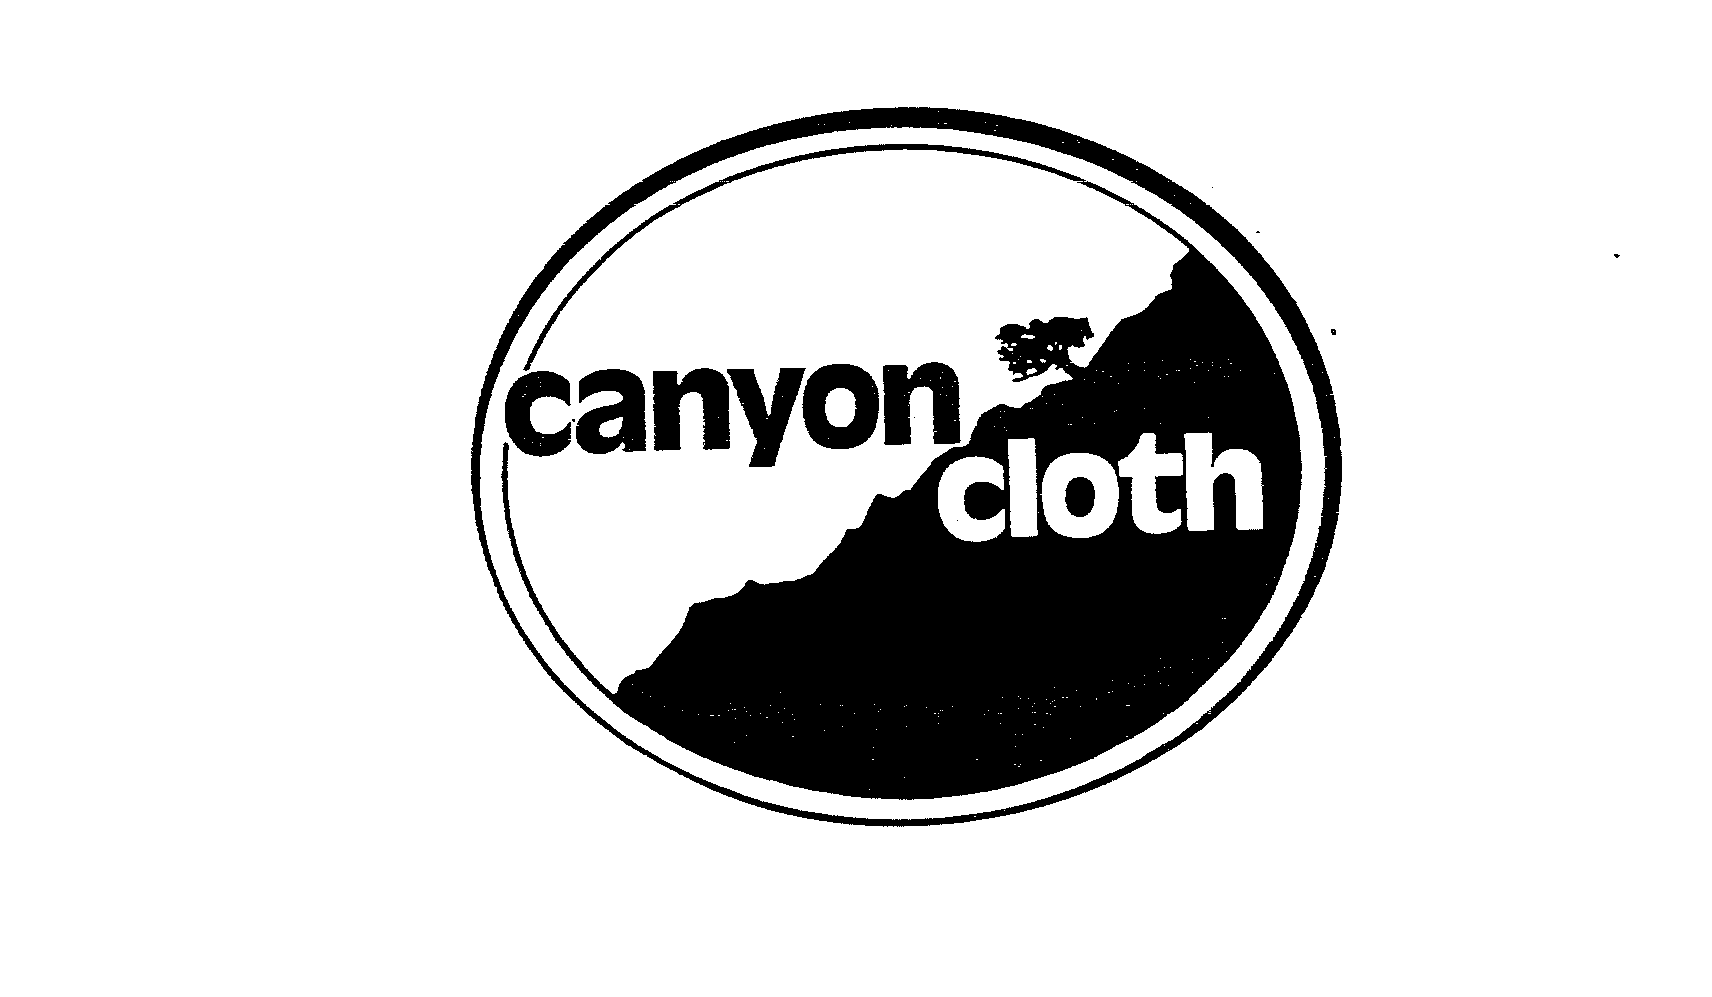  CANYON CLOTH